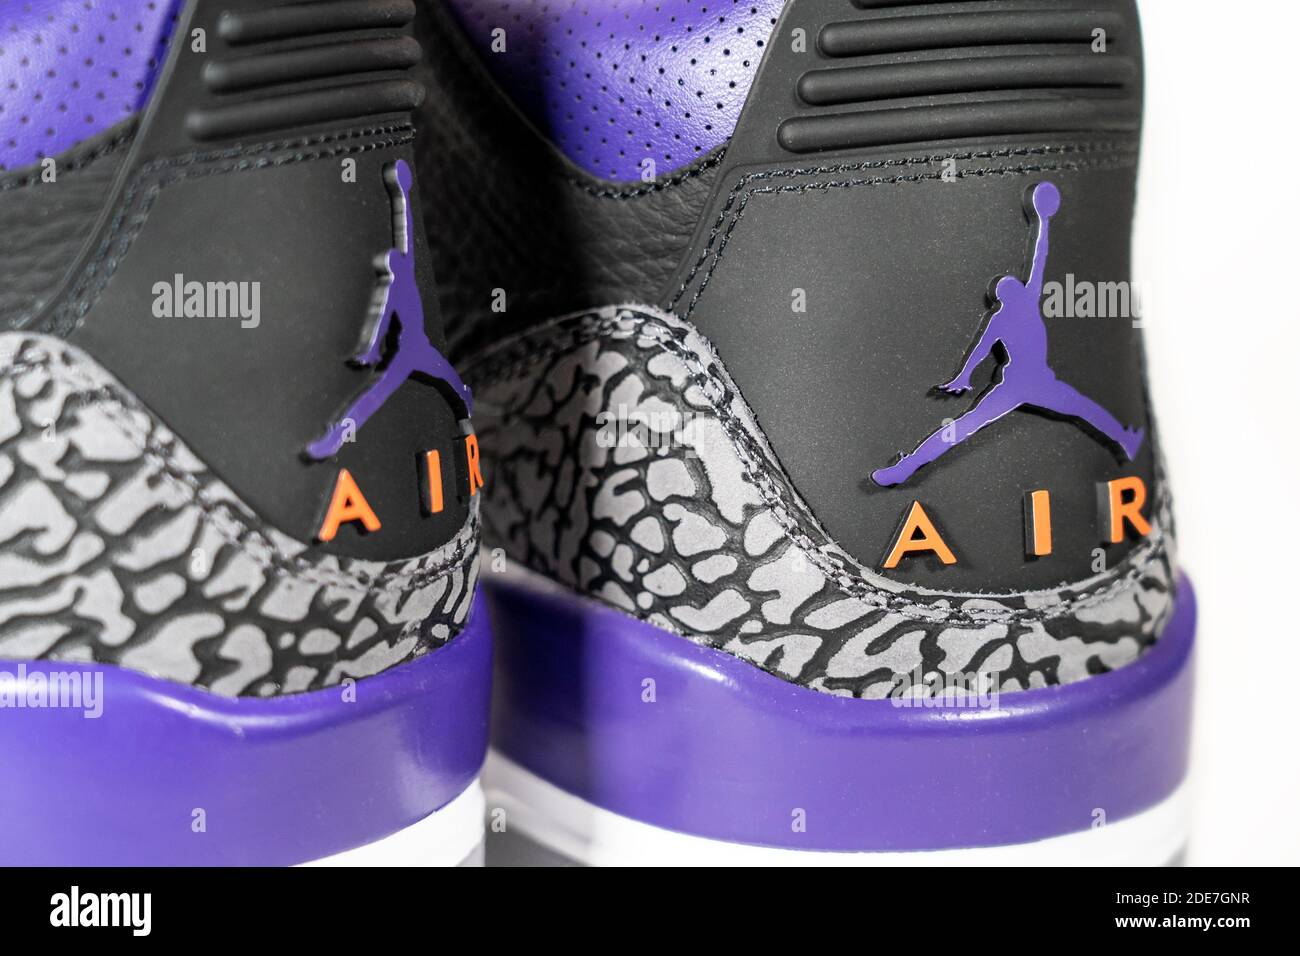 Air Jordan 3 Retro Court Purple - Legendary famous Nike and Jordan